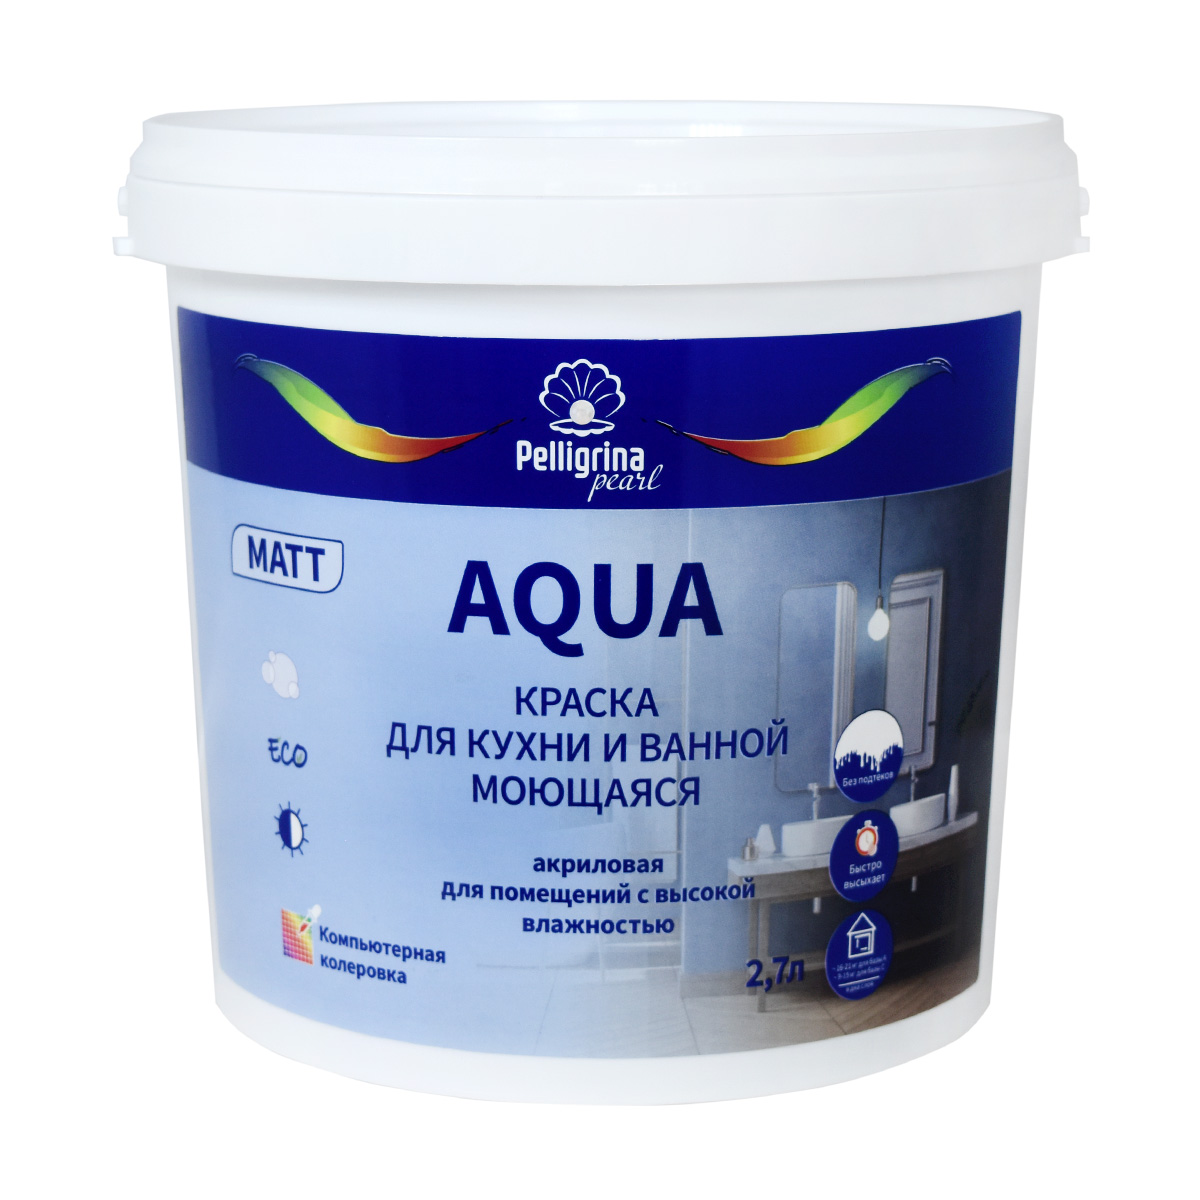 Краска для кухни и ванной Pelligrina Pearl Aqua, акриловая, матовая, база A, белая, 2,7 л краска teknos futura aqua 3 pm1 3 2 7л